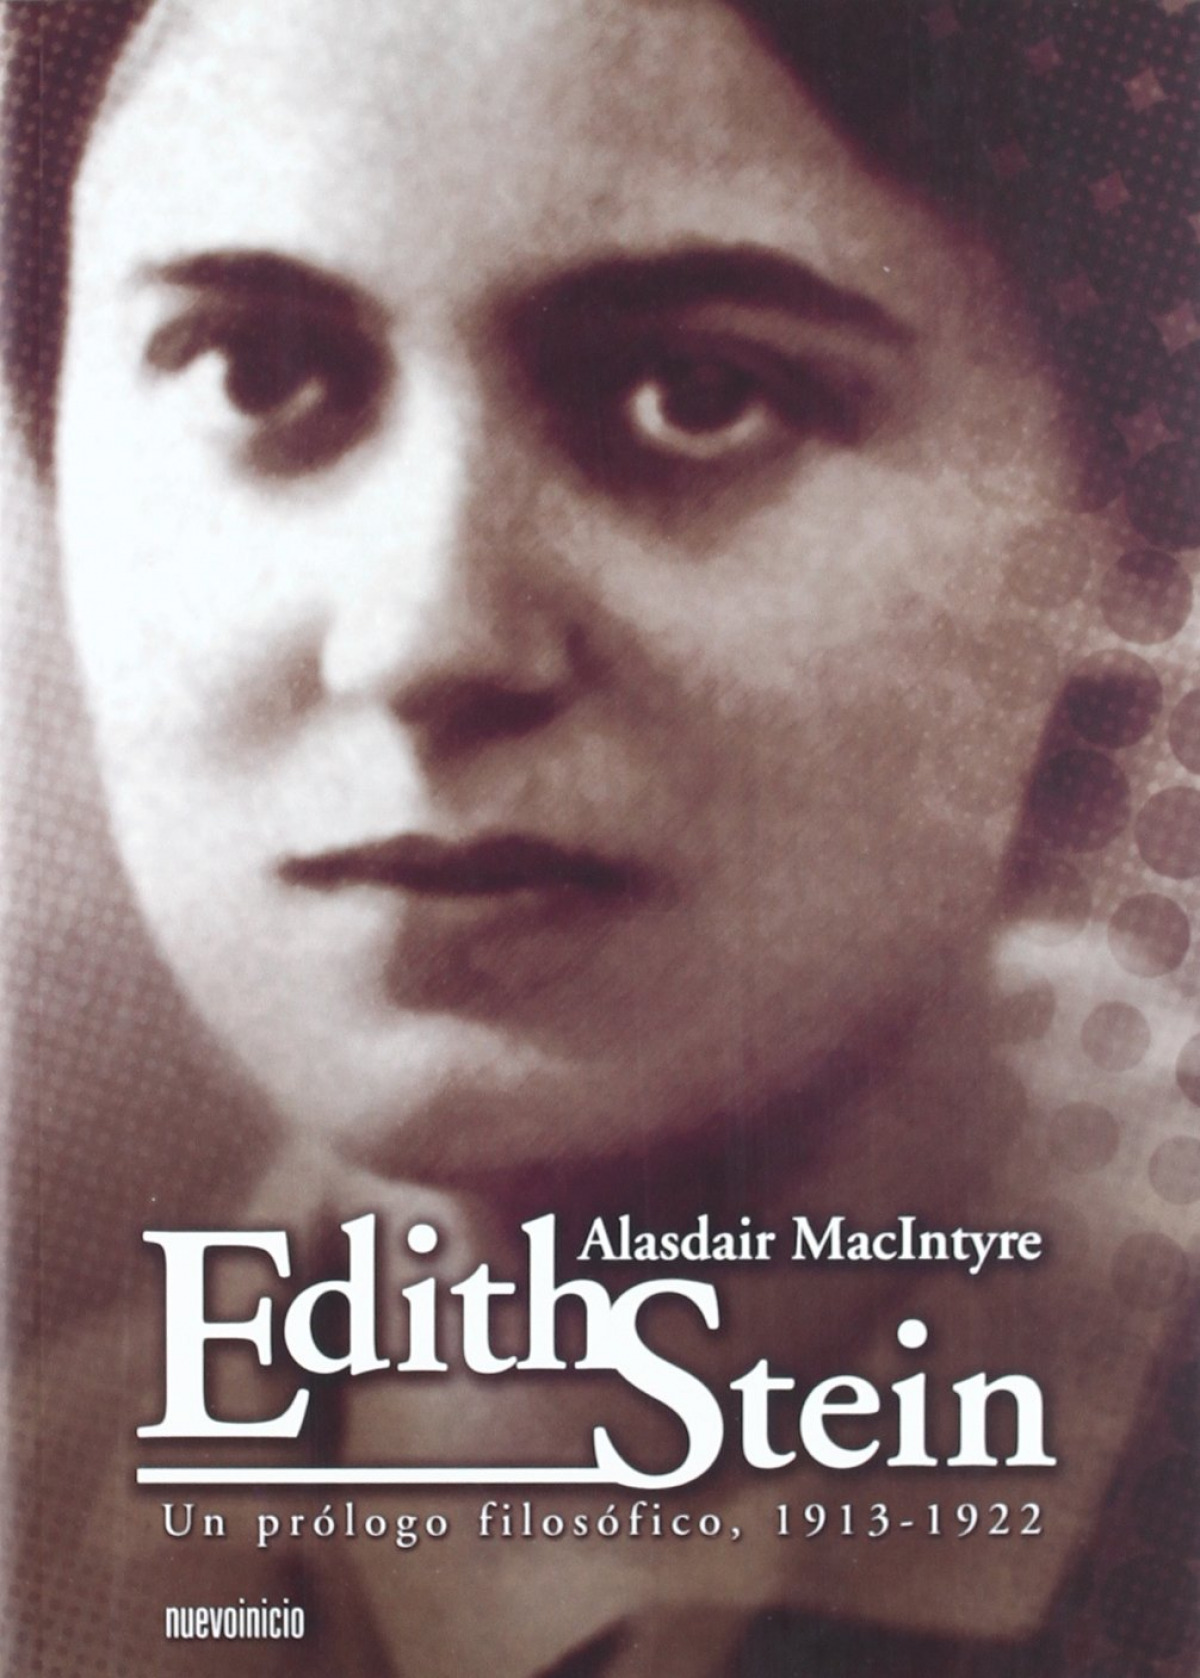 Edith stein. un prologo filosofico 1913-1922 - Macintyre, Alasdair